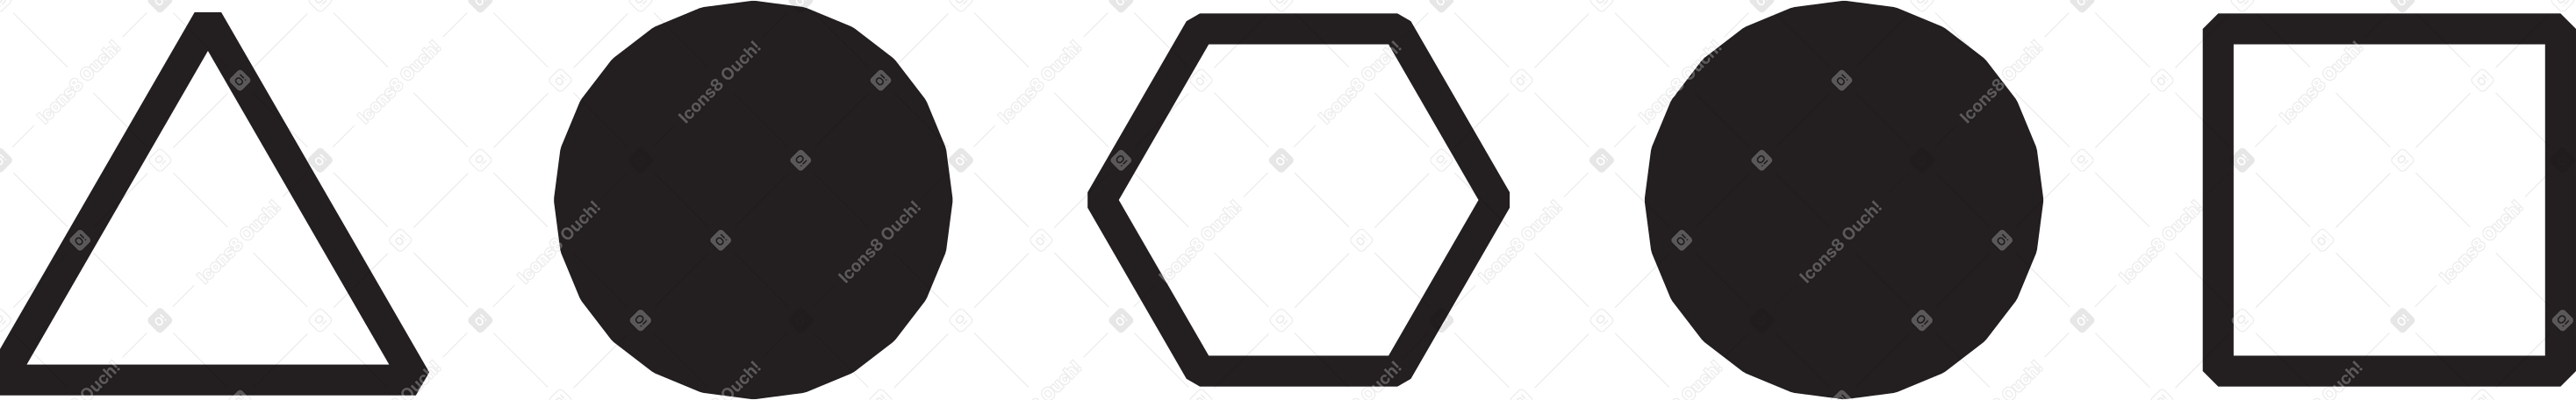 figuras geométricas PNG, SVG